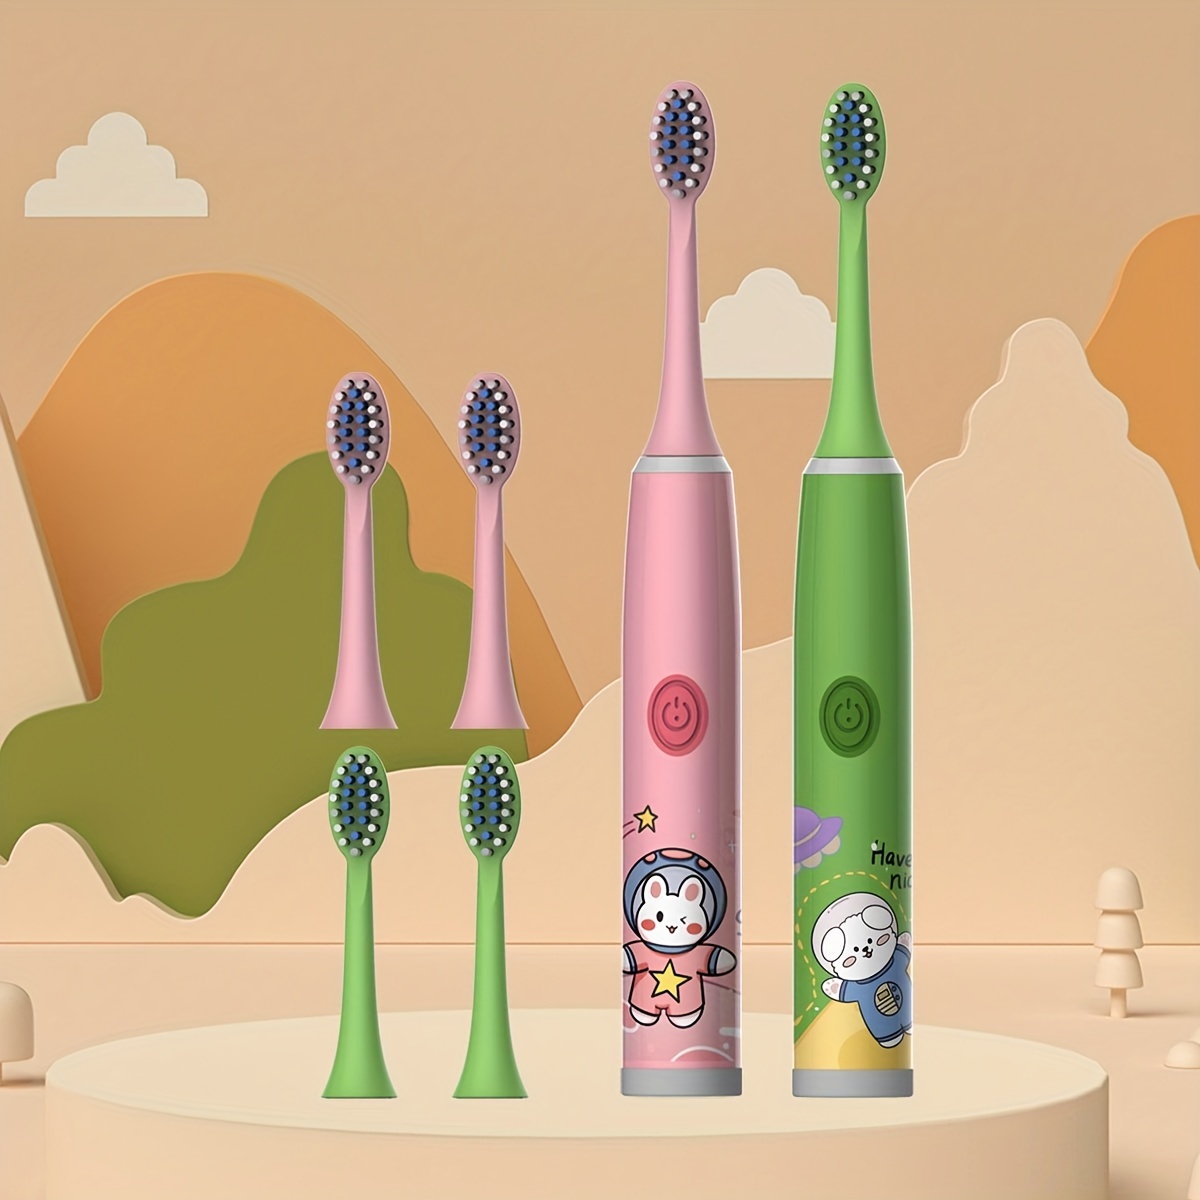 Kids Electric Toothbrush, U Shaped Ultrasonic Automatic Tooth  Brush,Toothbrush with 2 Brush Heads,Six Cleaning Modes,IPX7  Waterproof,Cartoon Modeling